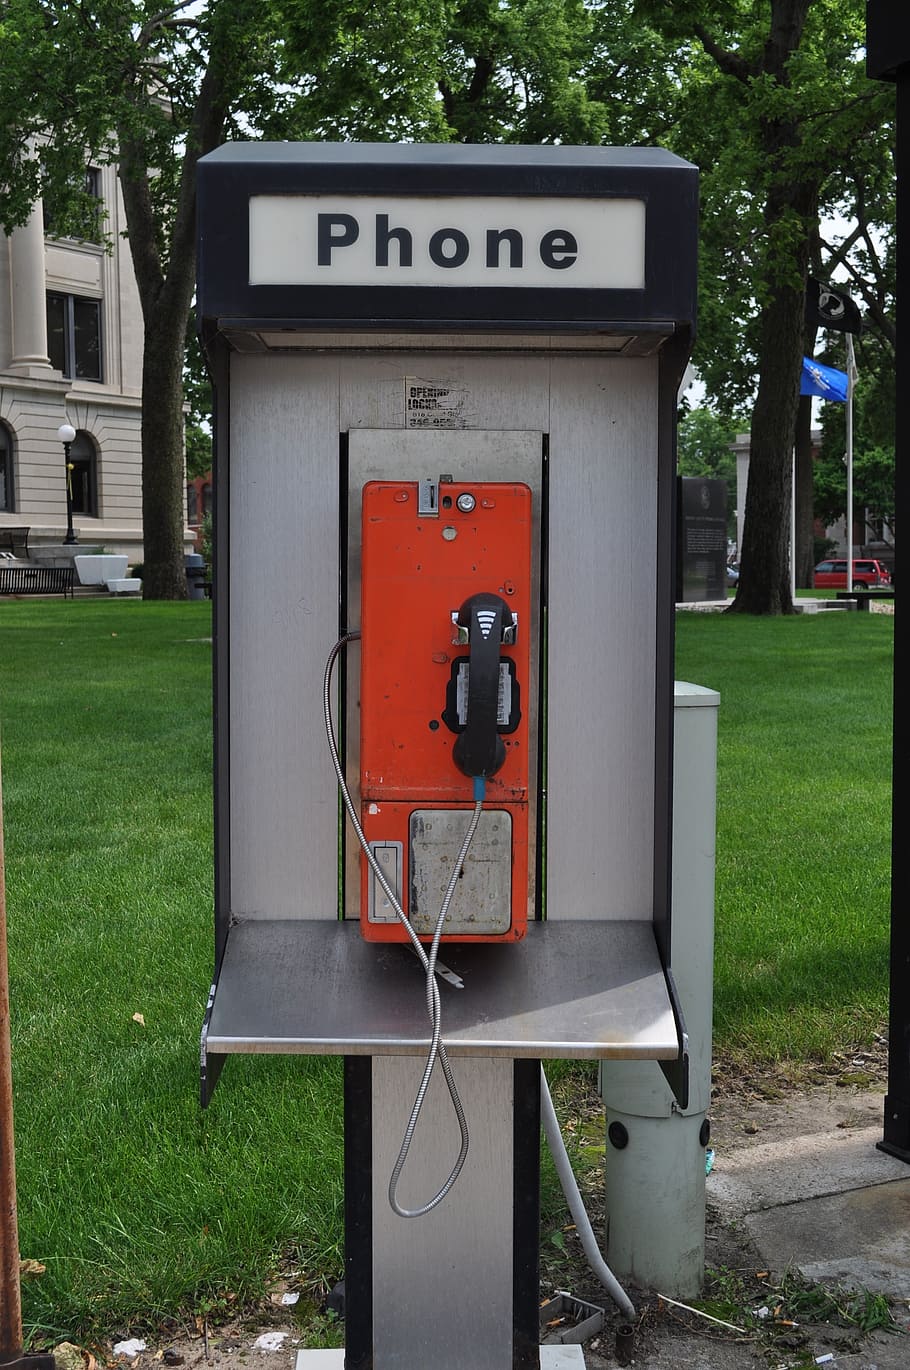 phone, booth, telephone, street, urban, retro, vintage, public, communication, red